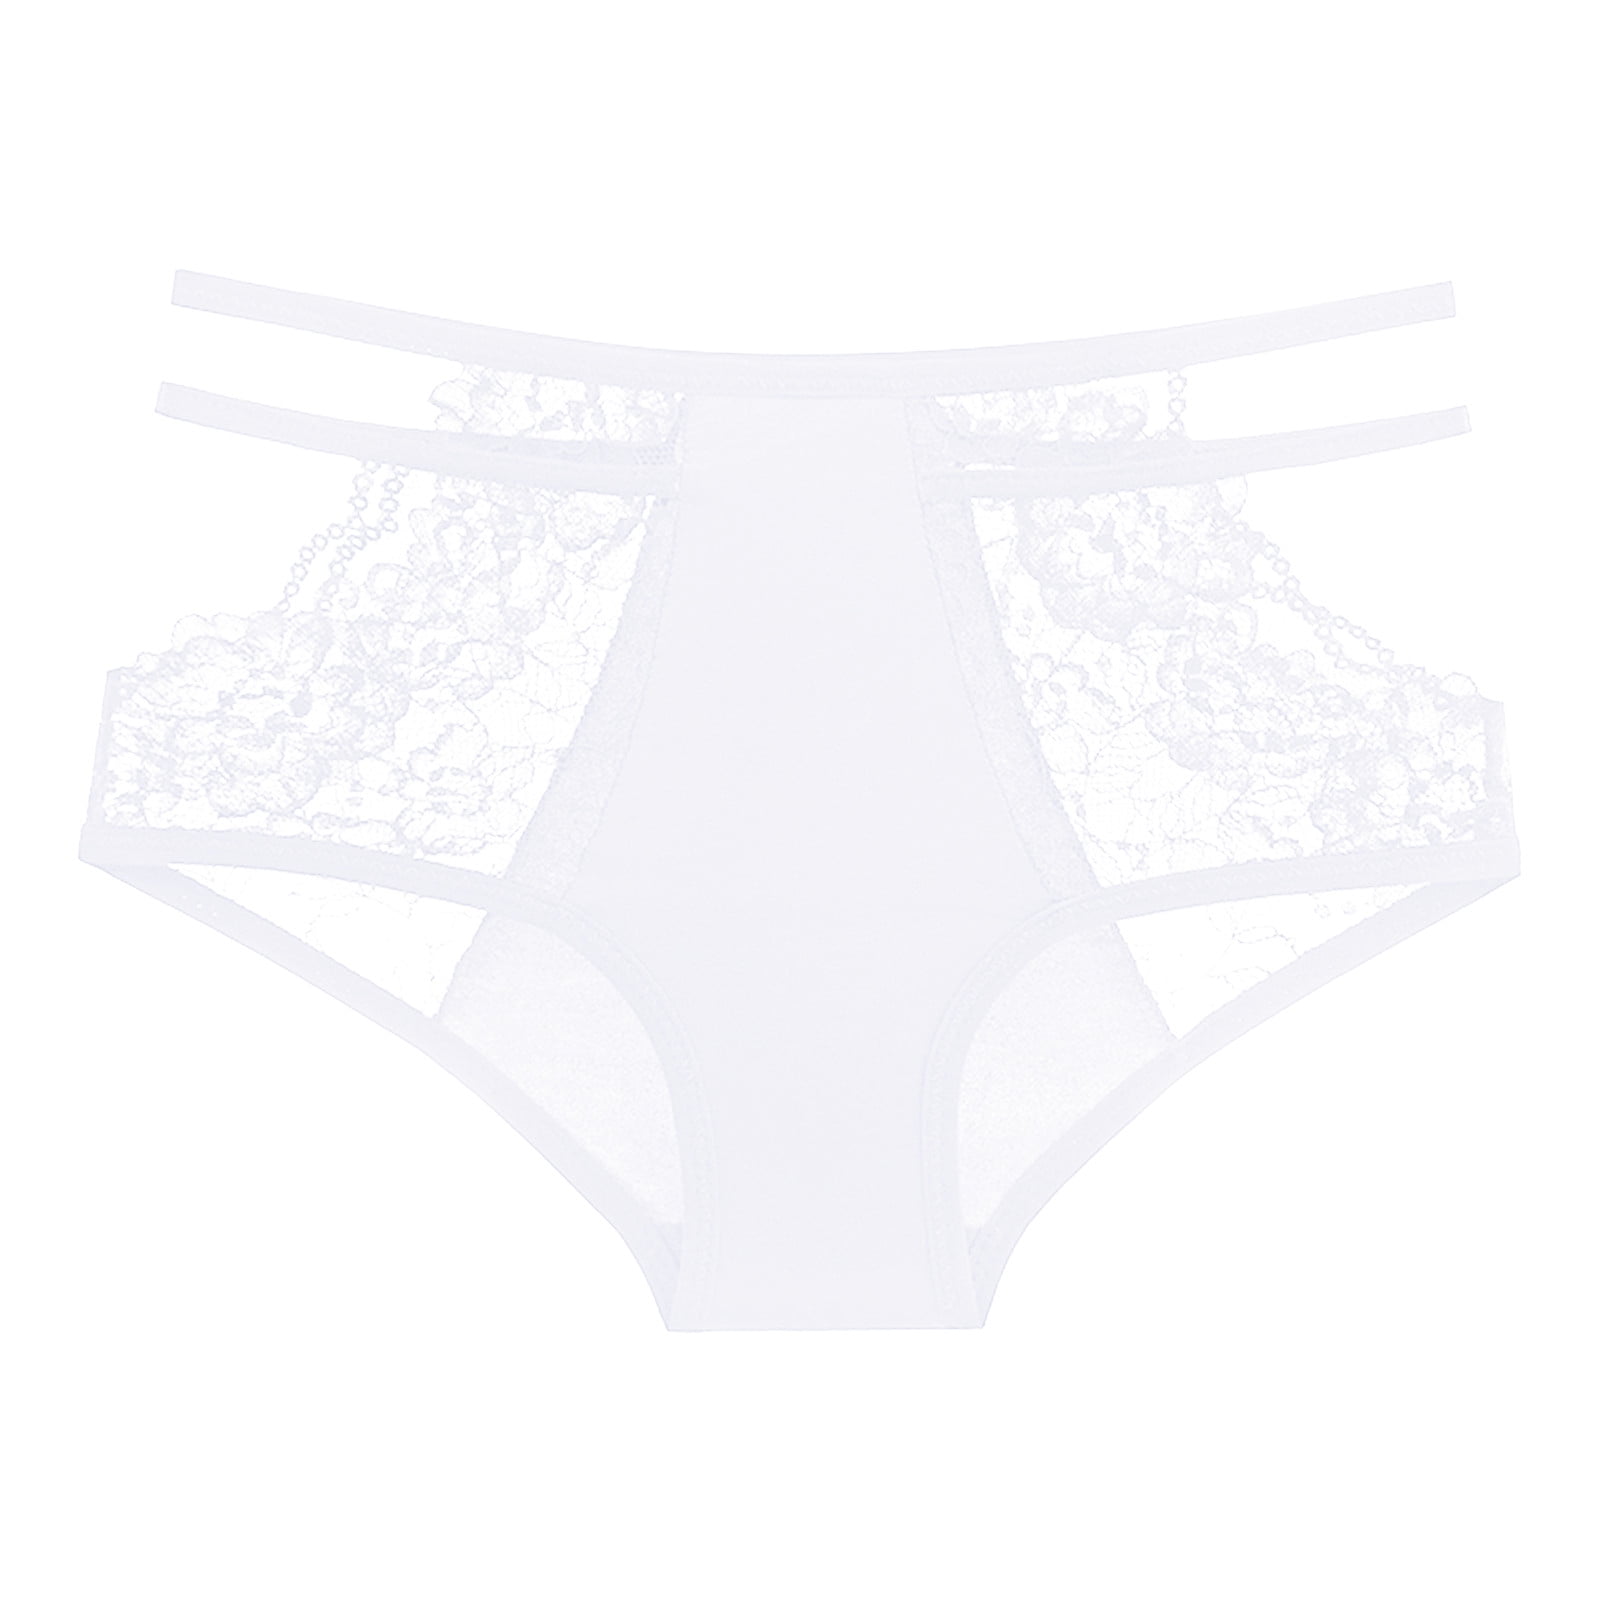 vbnergoie Womens Underwear Cotton Bikini Panties Lace Soft Hipster